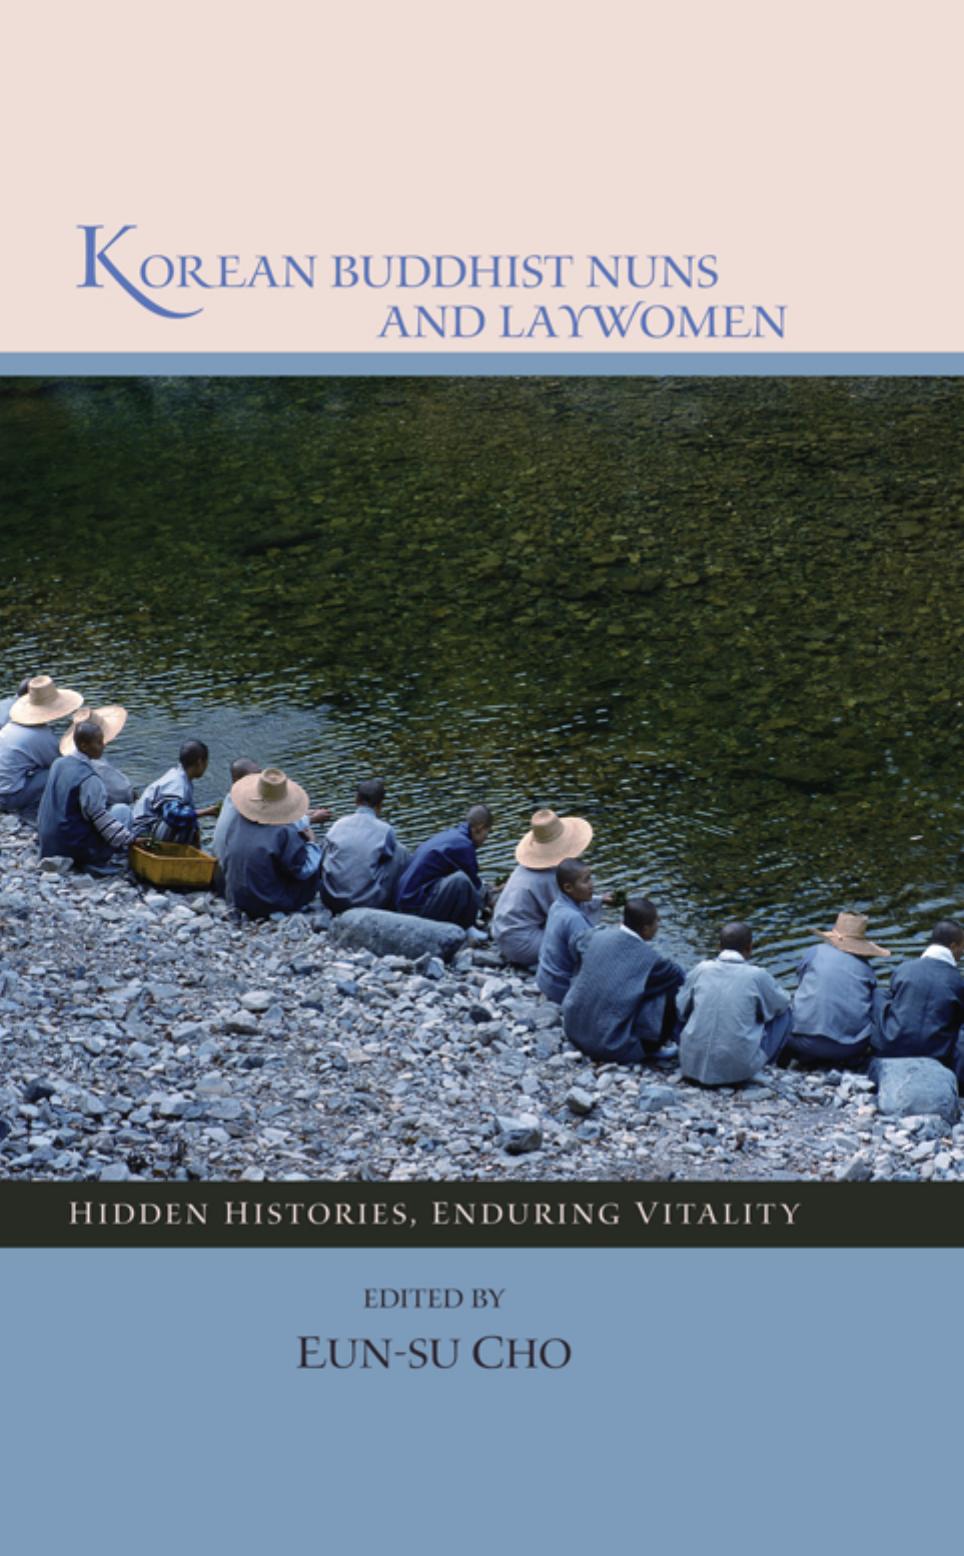 Korean Buddhist Nuns and Laywomen : Hidden Histories, Enduring Vitality by Eun-su Cho; Robert E. Buswell